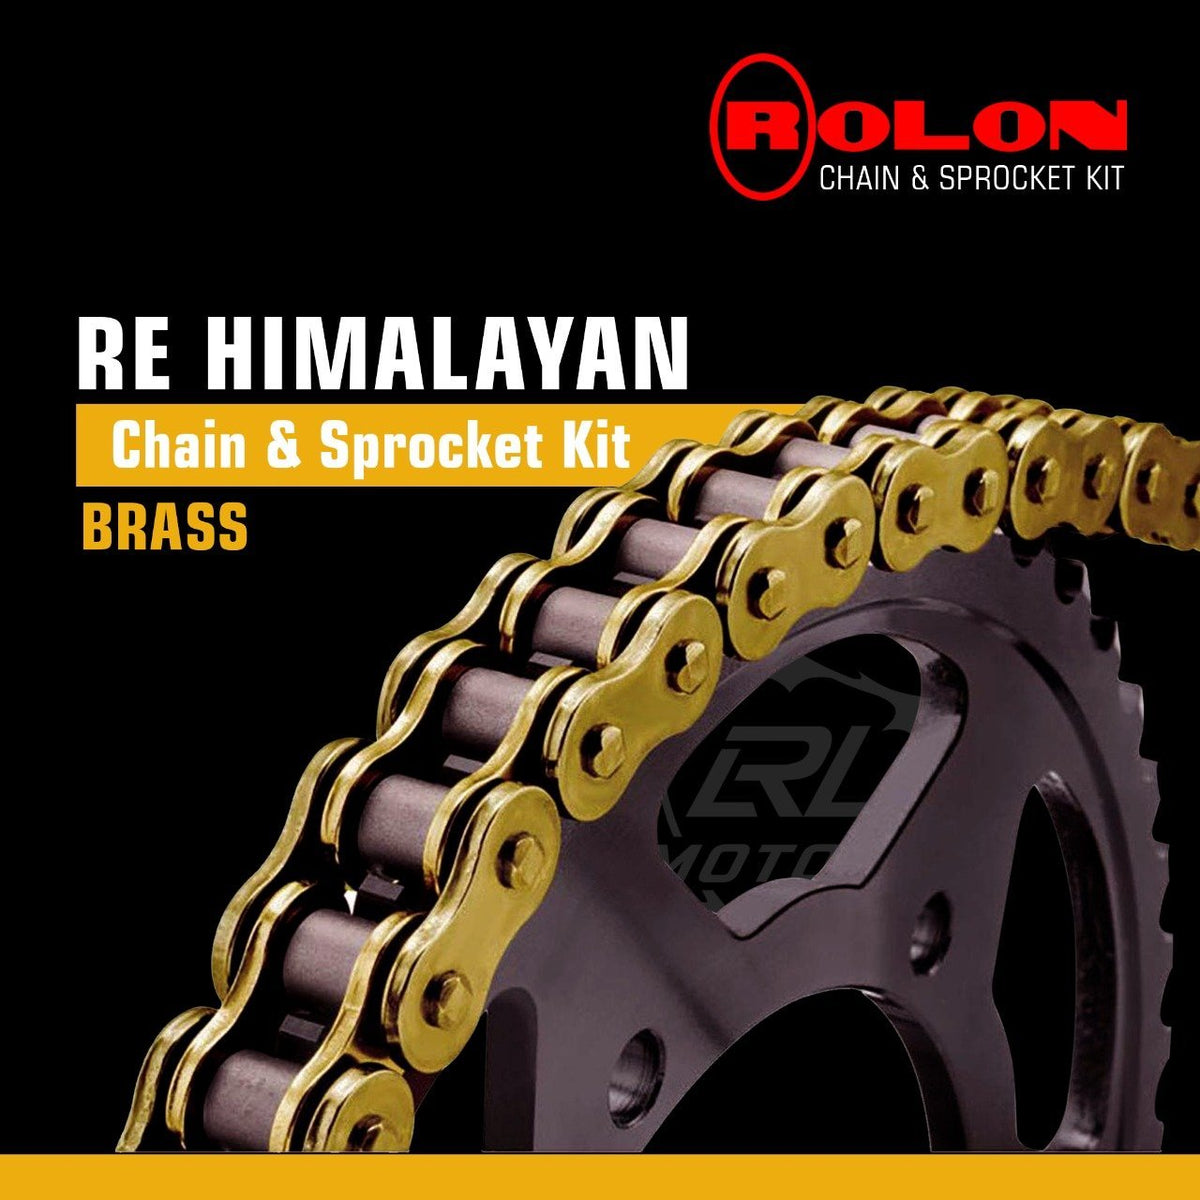 Royal Enfield Himalayan Rolon Brass Chain & Sprocket Kit - LRL Motors